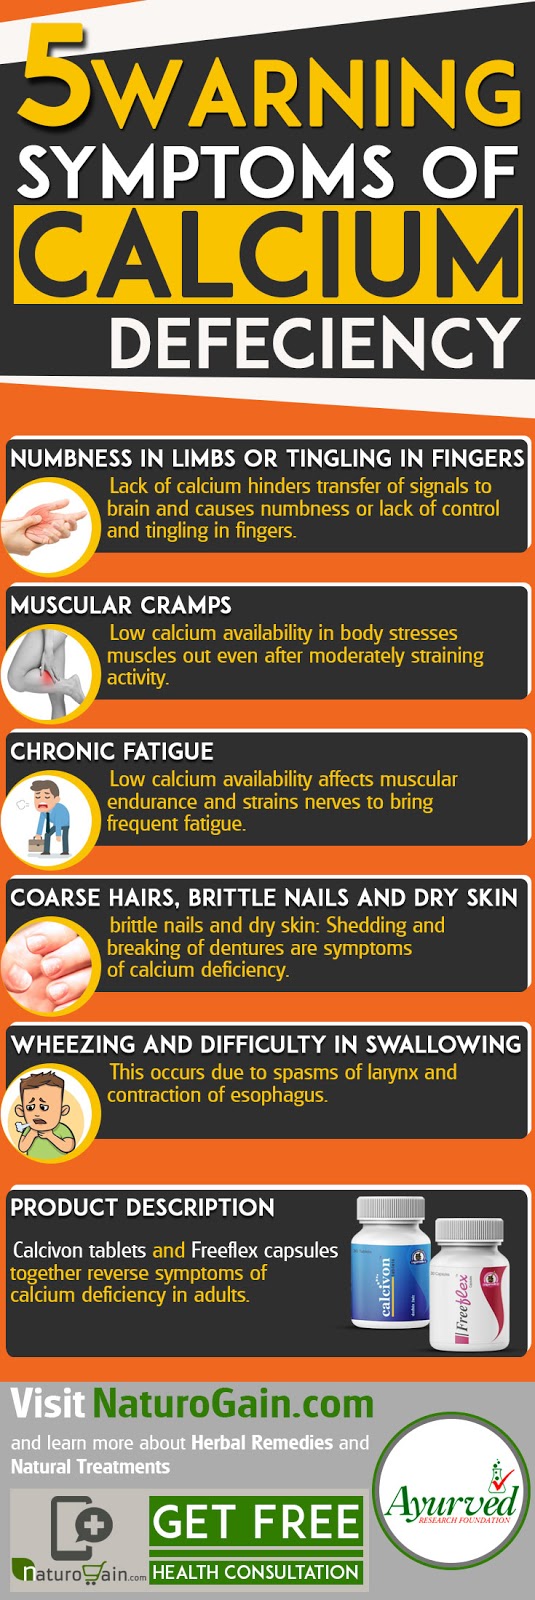 calcium-deficiency-symptoms-info-graphic